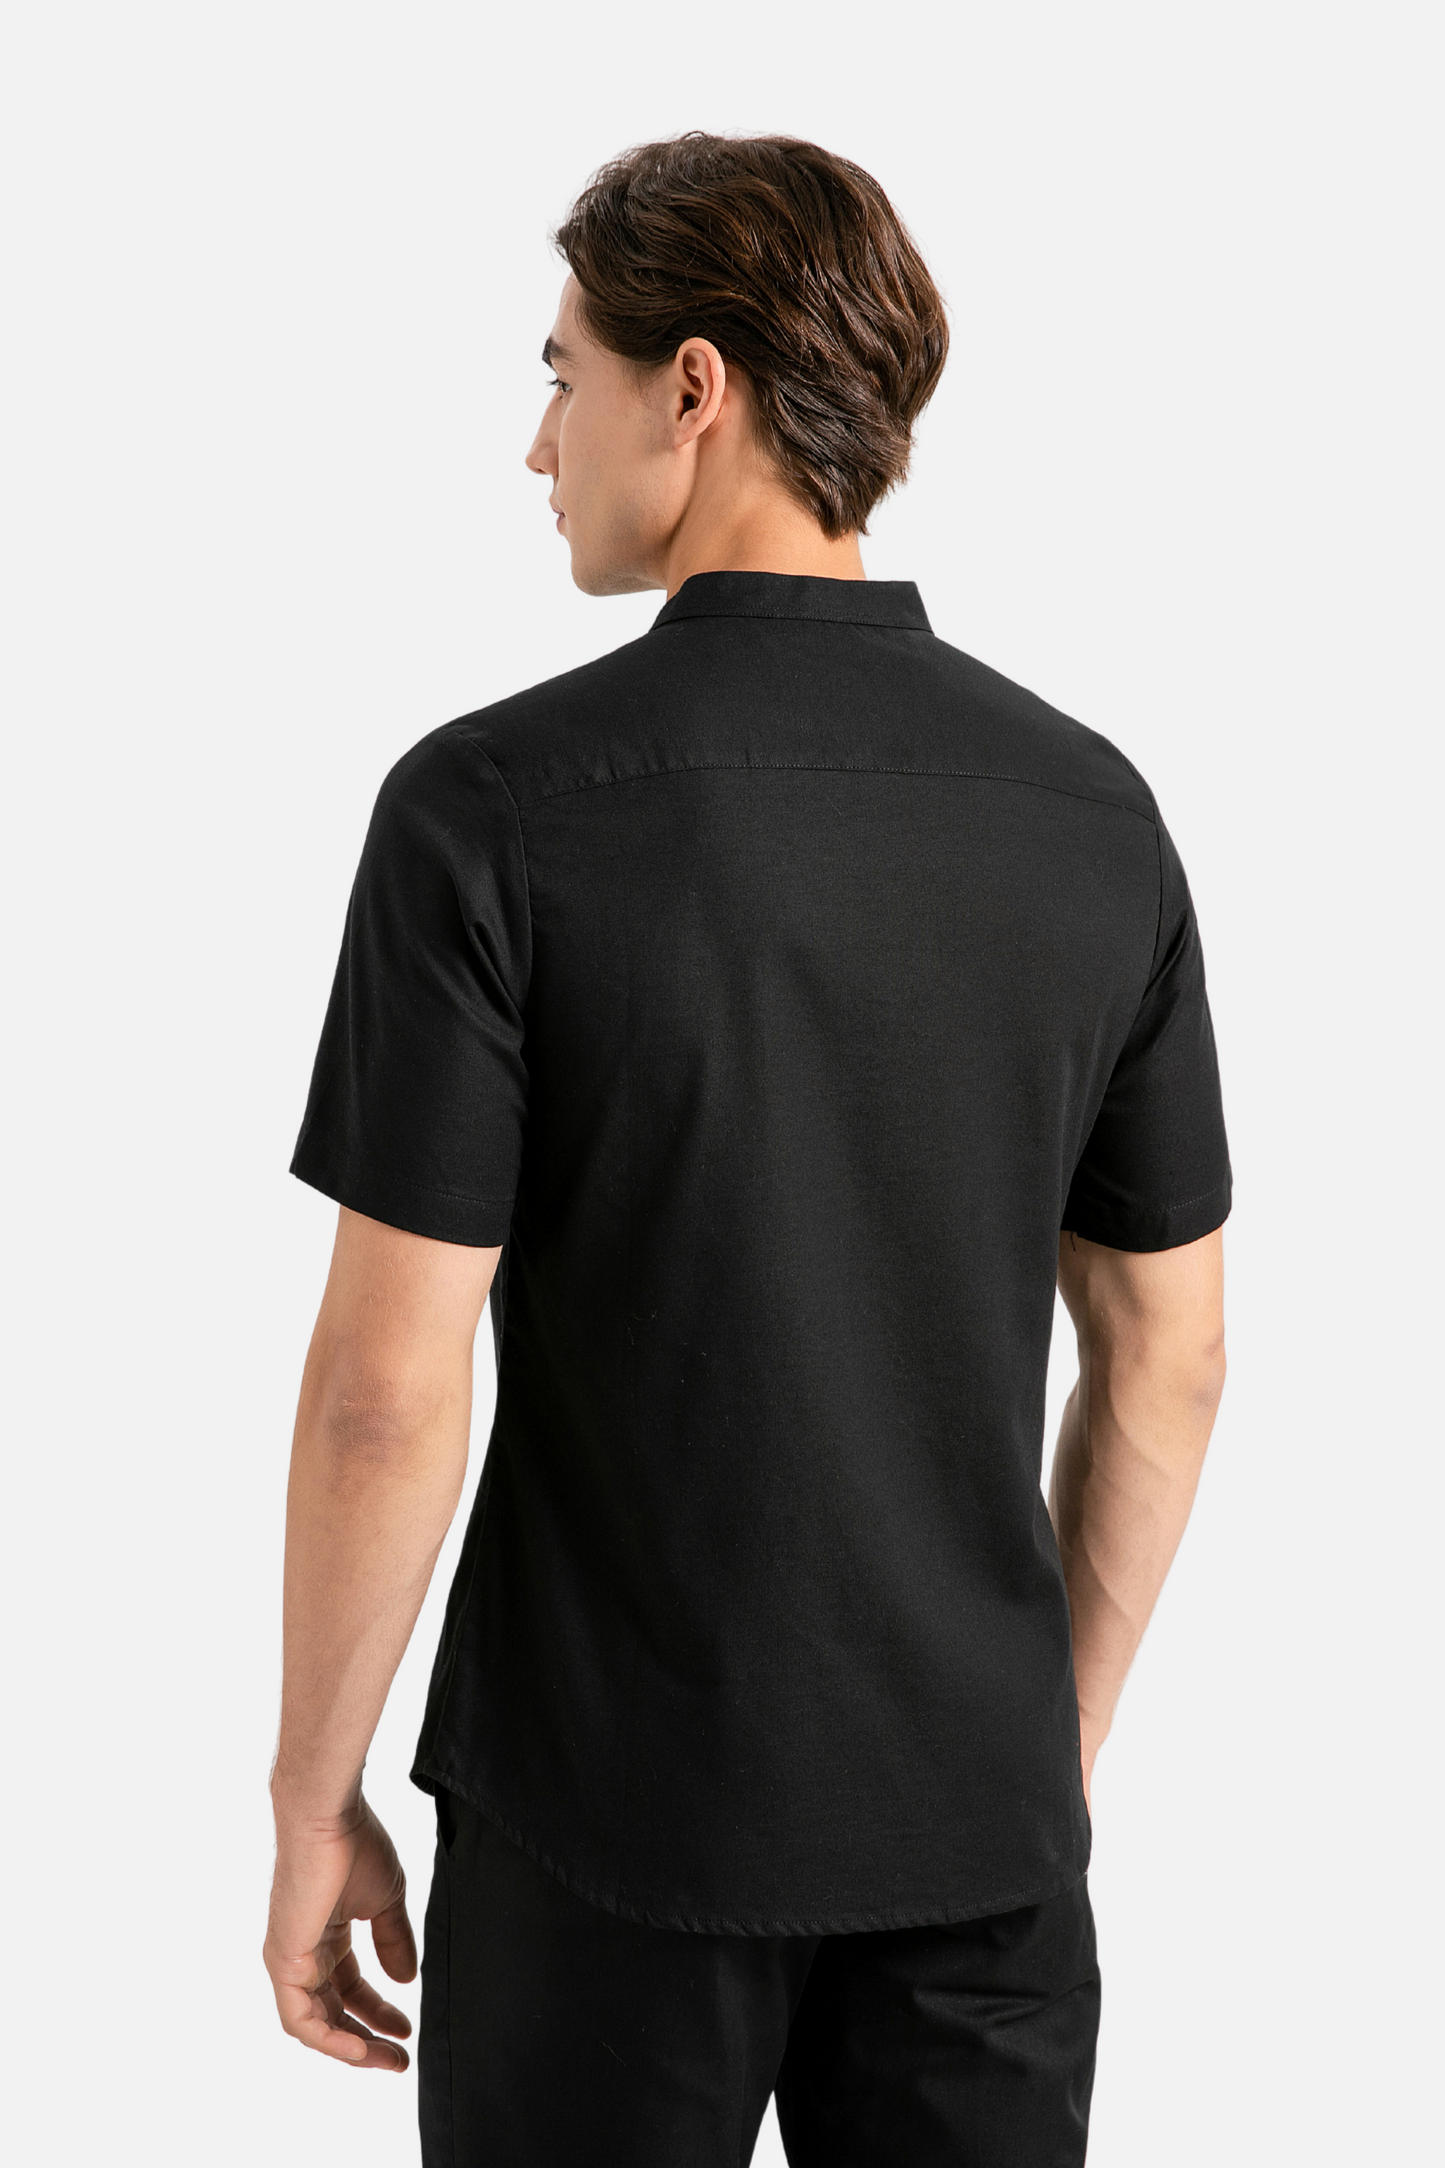 Brydan Black Shirt, Short Sleeve